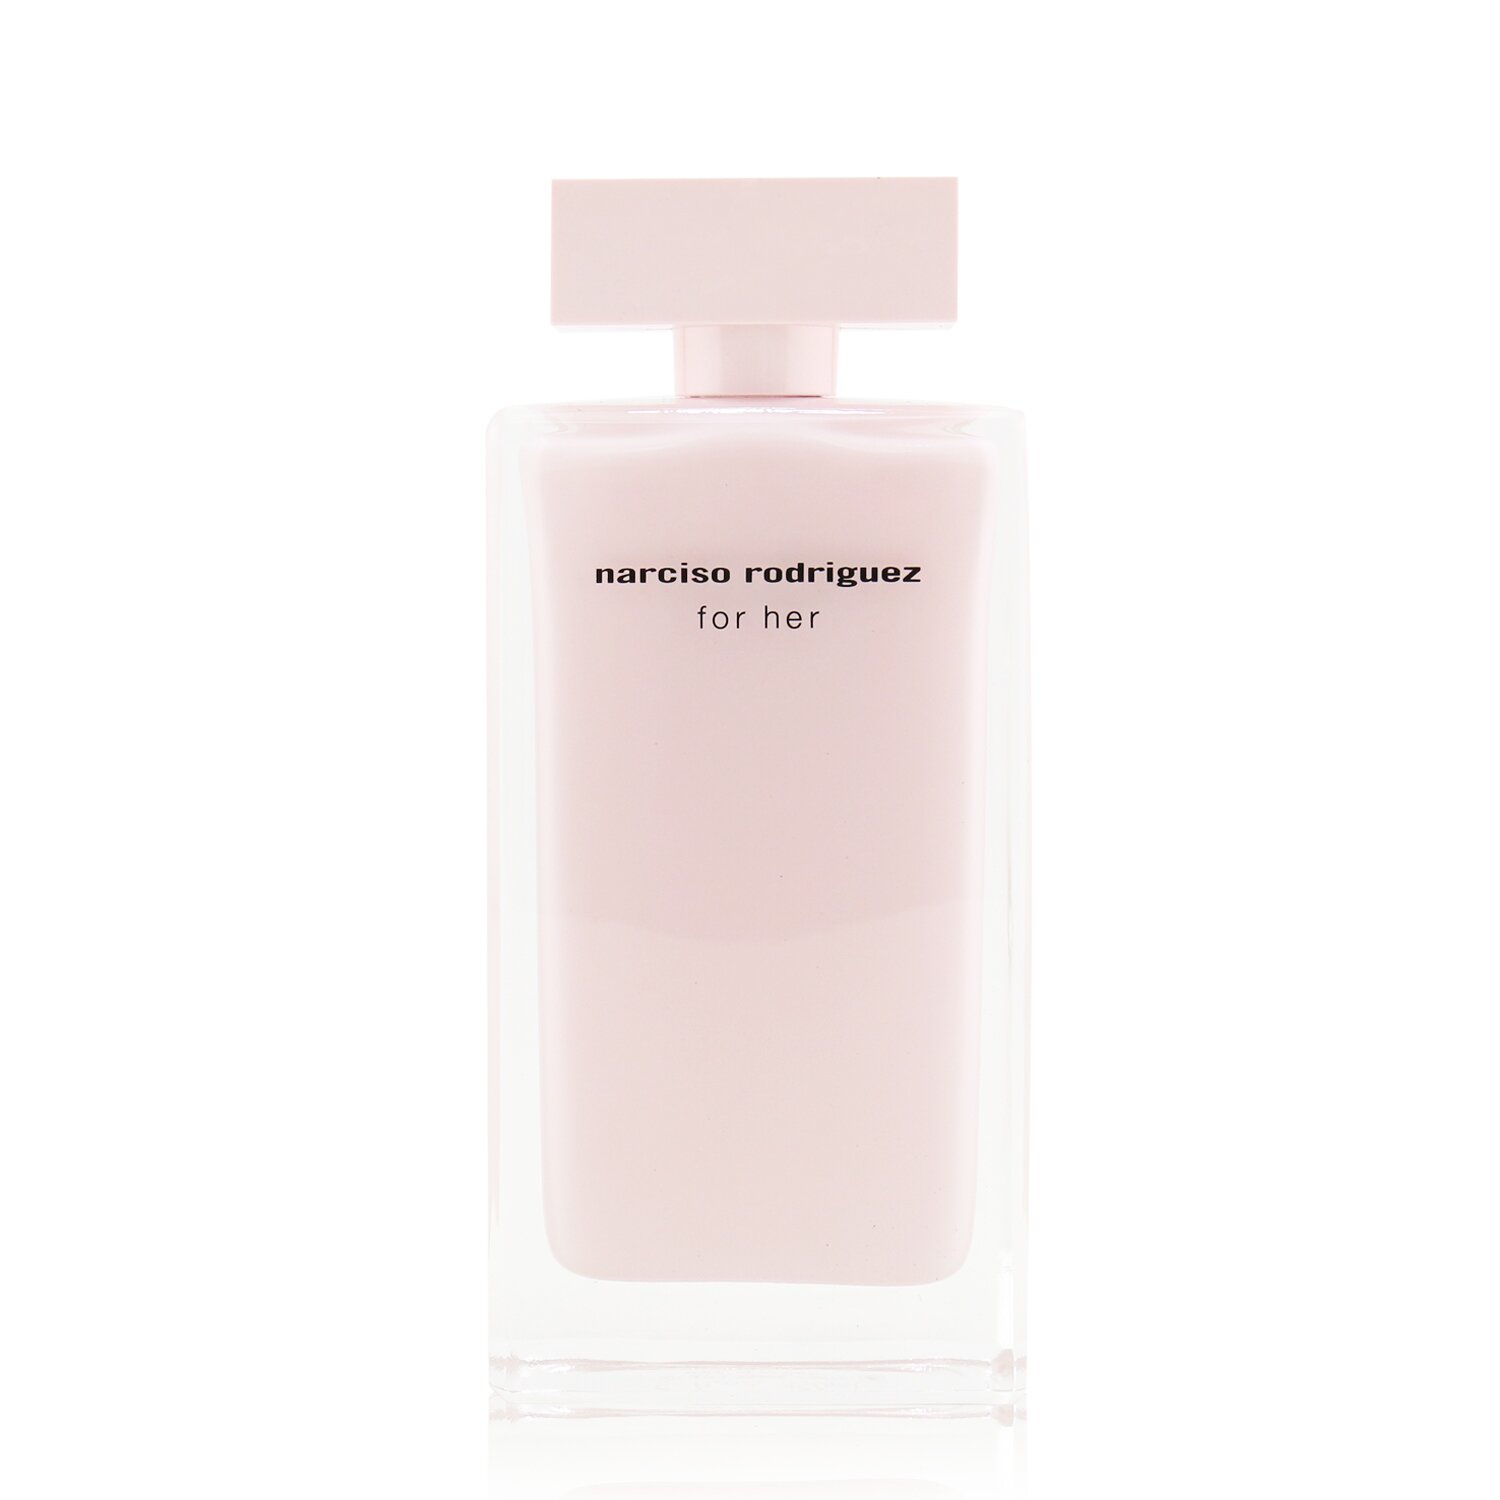 150ml/5oz Rodriguez | KOODING De Narciso Her Eau For Parfum Spray